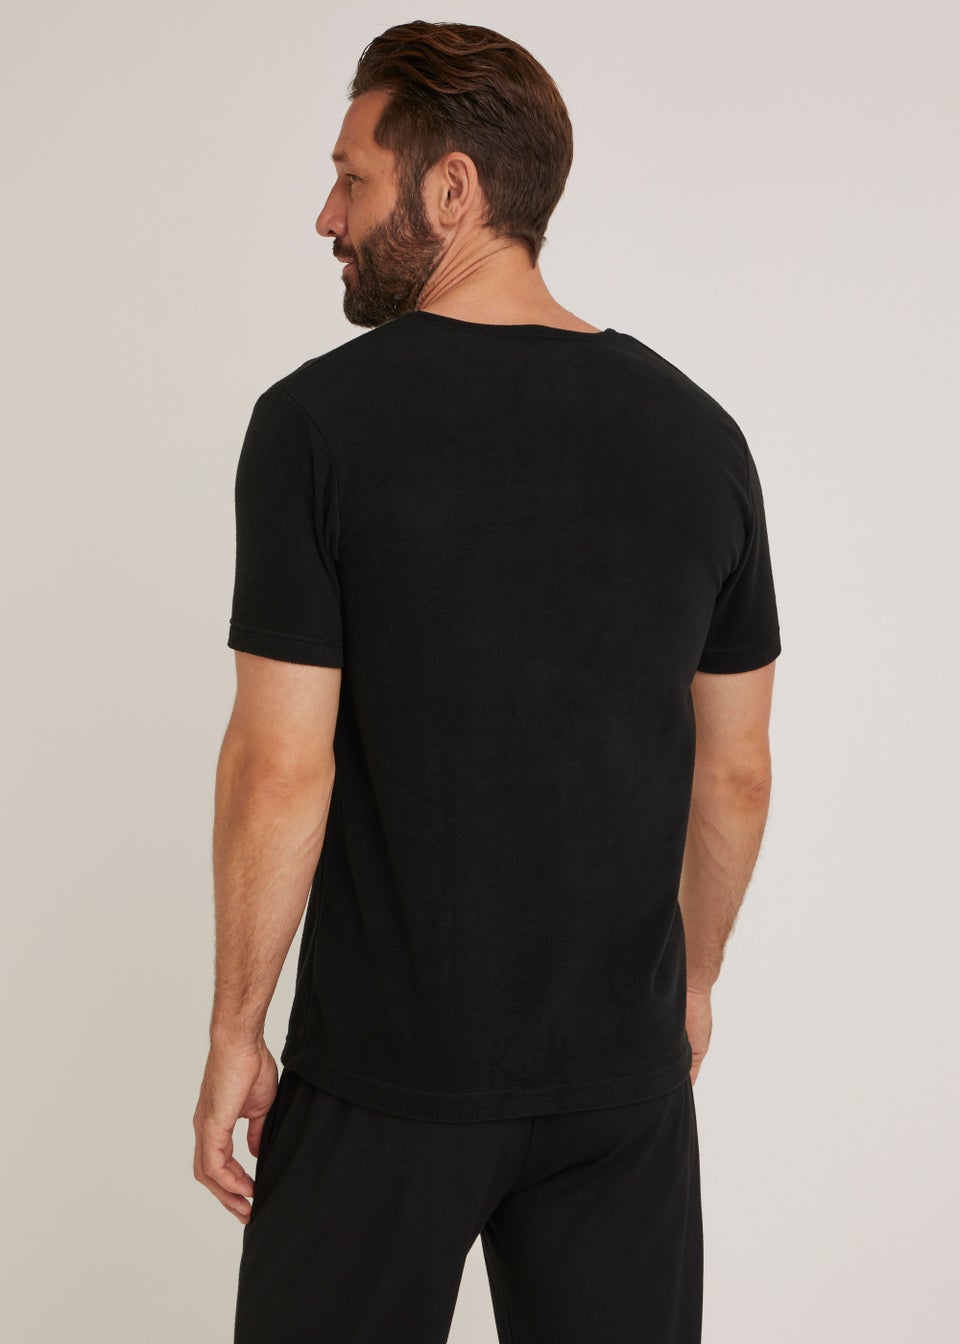 Black Microfleece Thermal T-Shirt